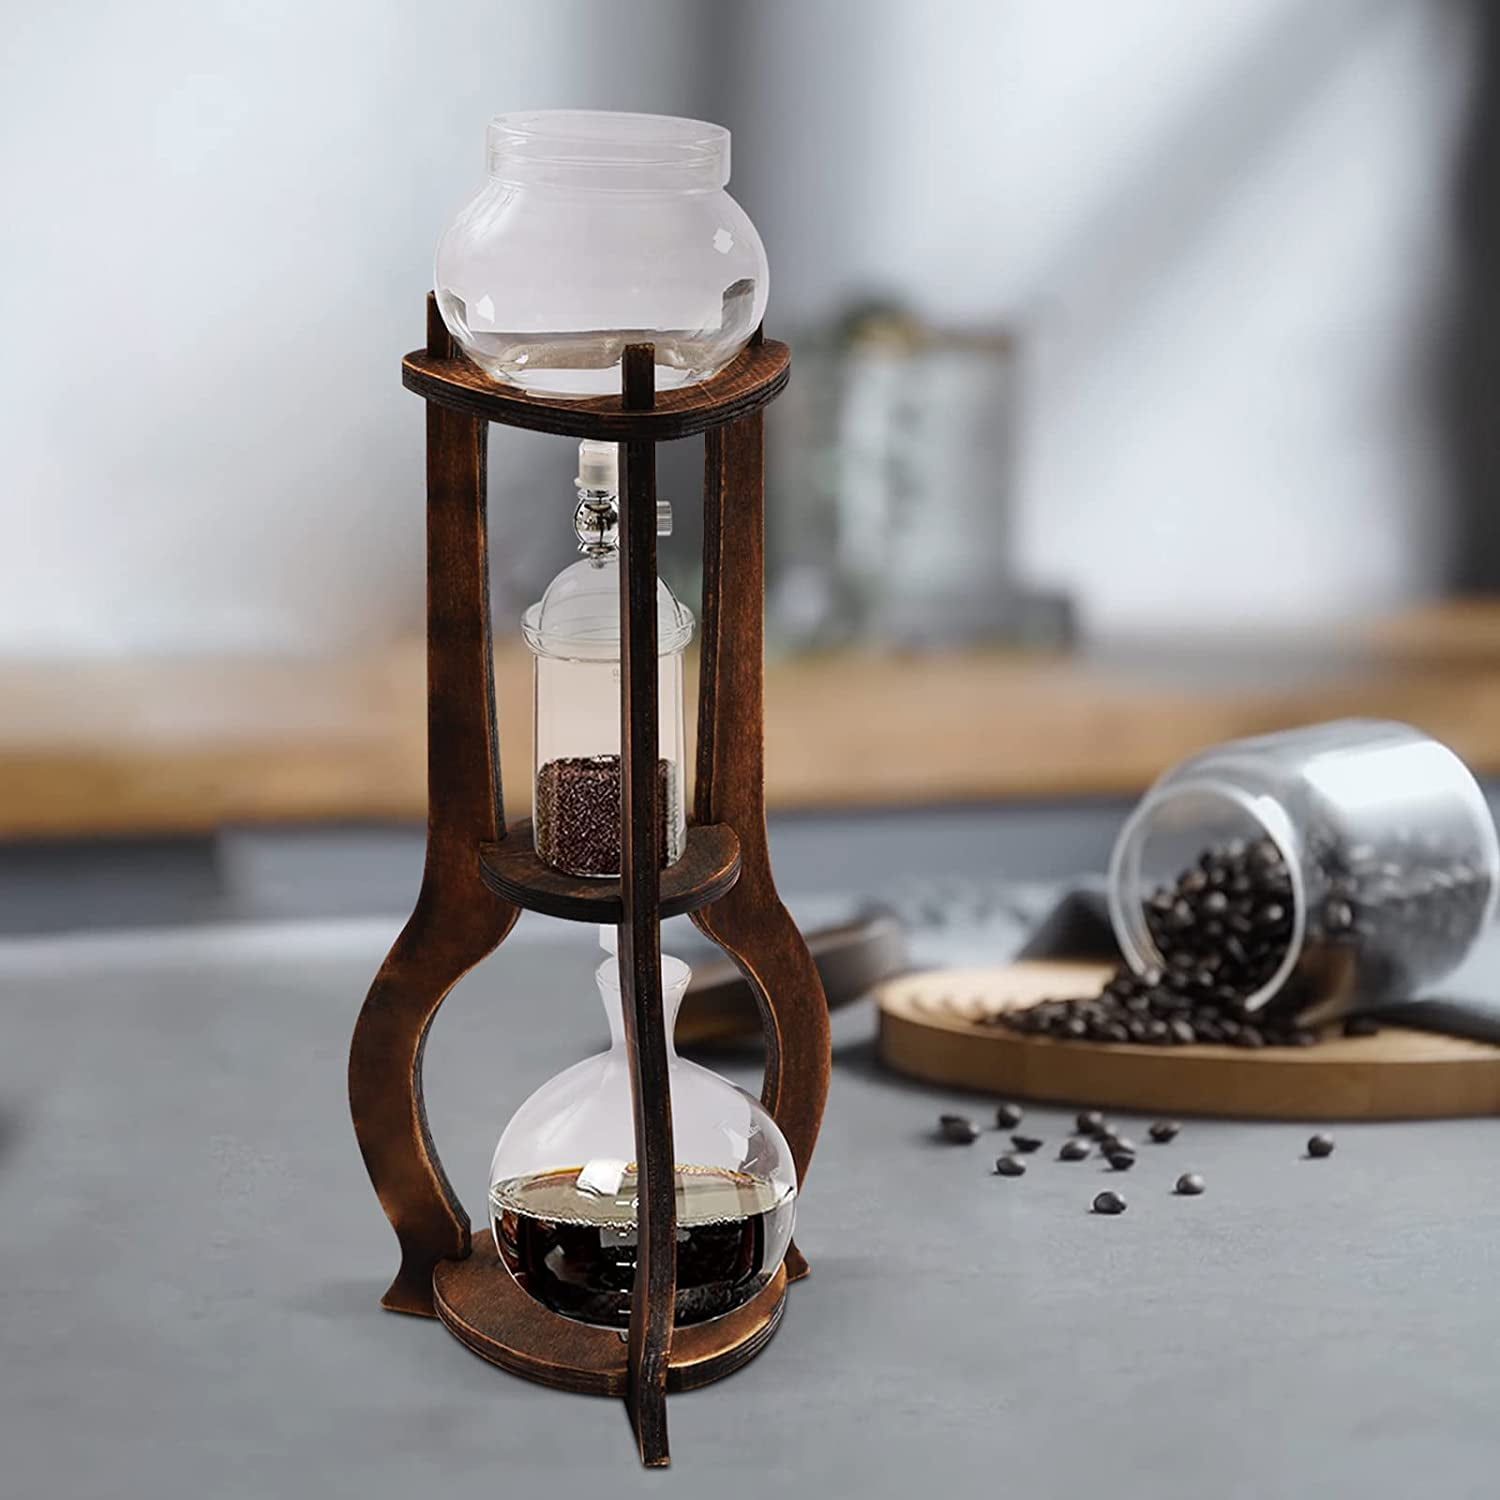 Nispira Retro Ice Cold Brew Dripping Coffee Maker Tower, 600ml in Wood